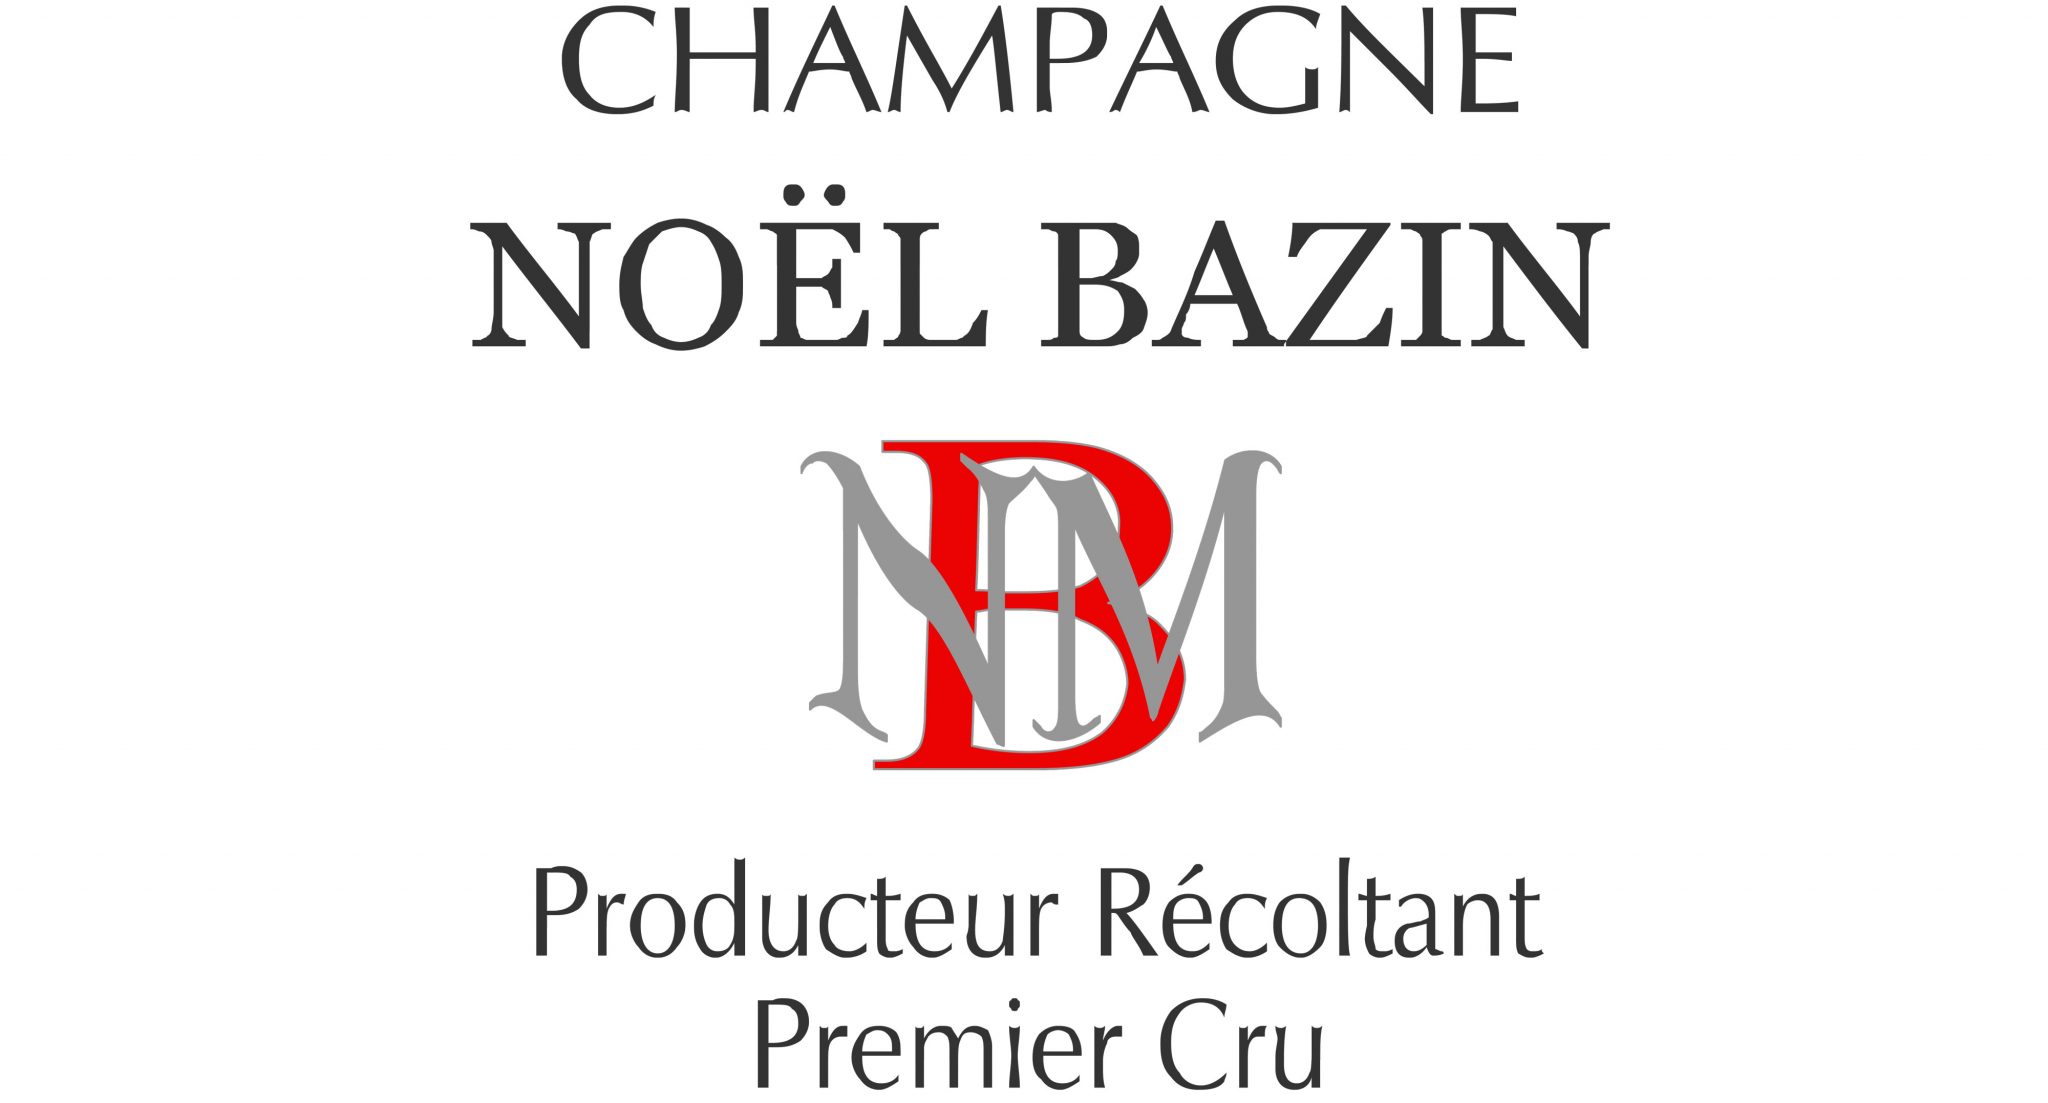 Champagne Noël Bazin